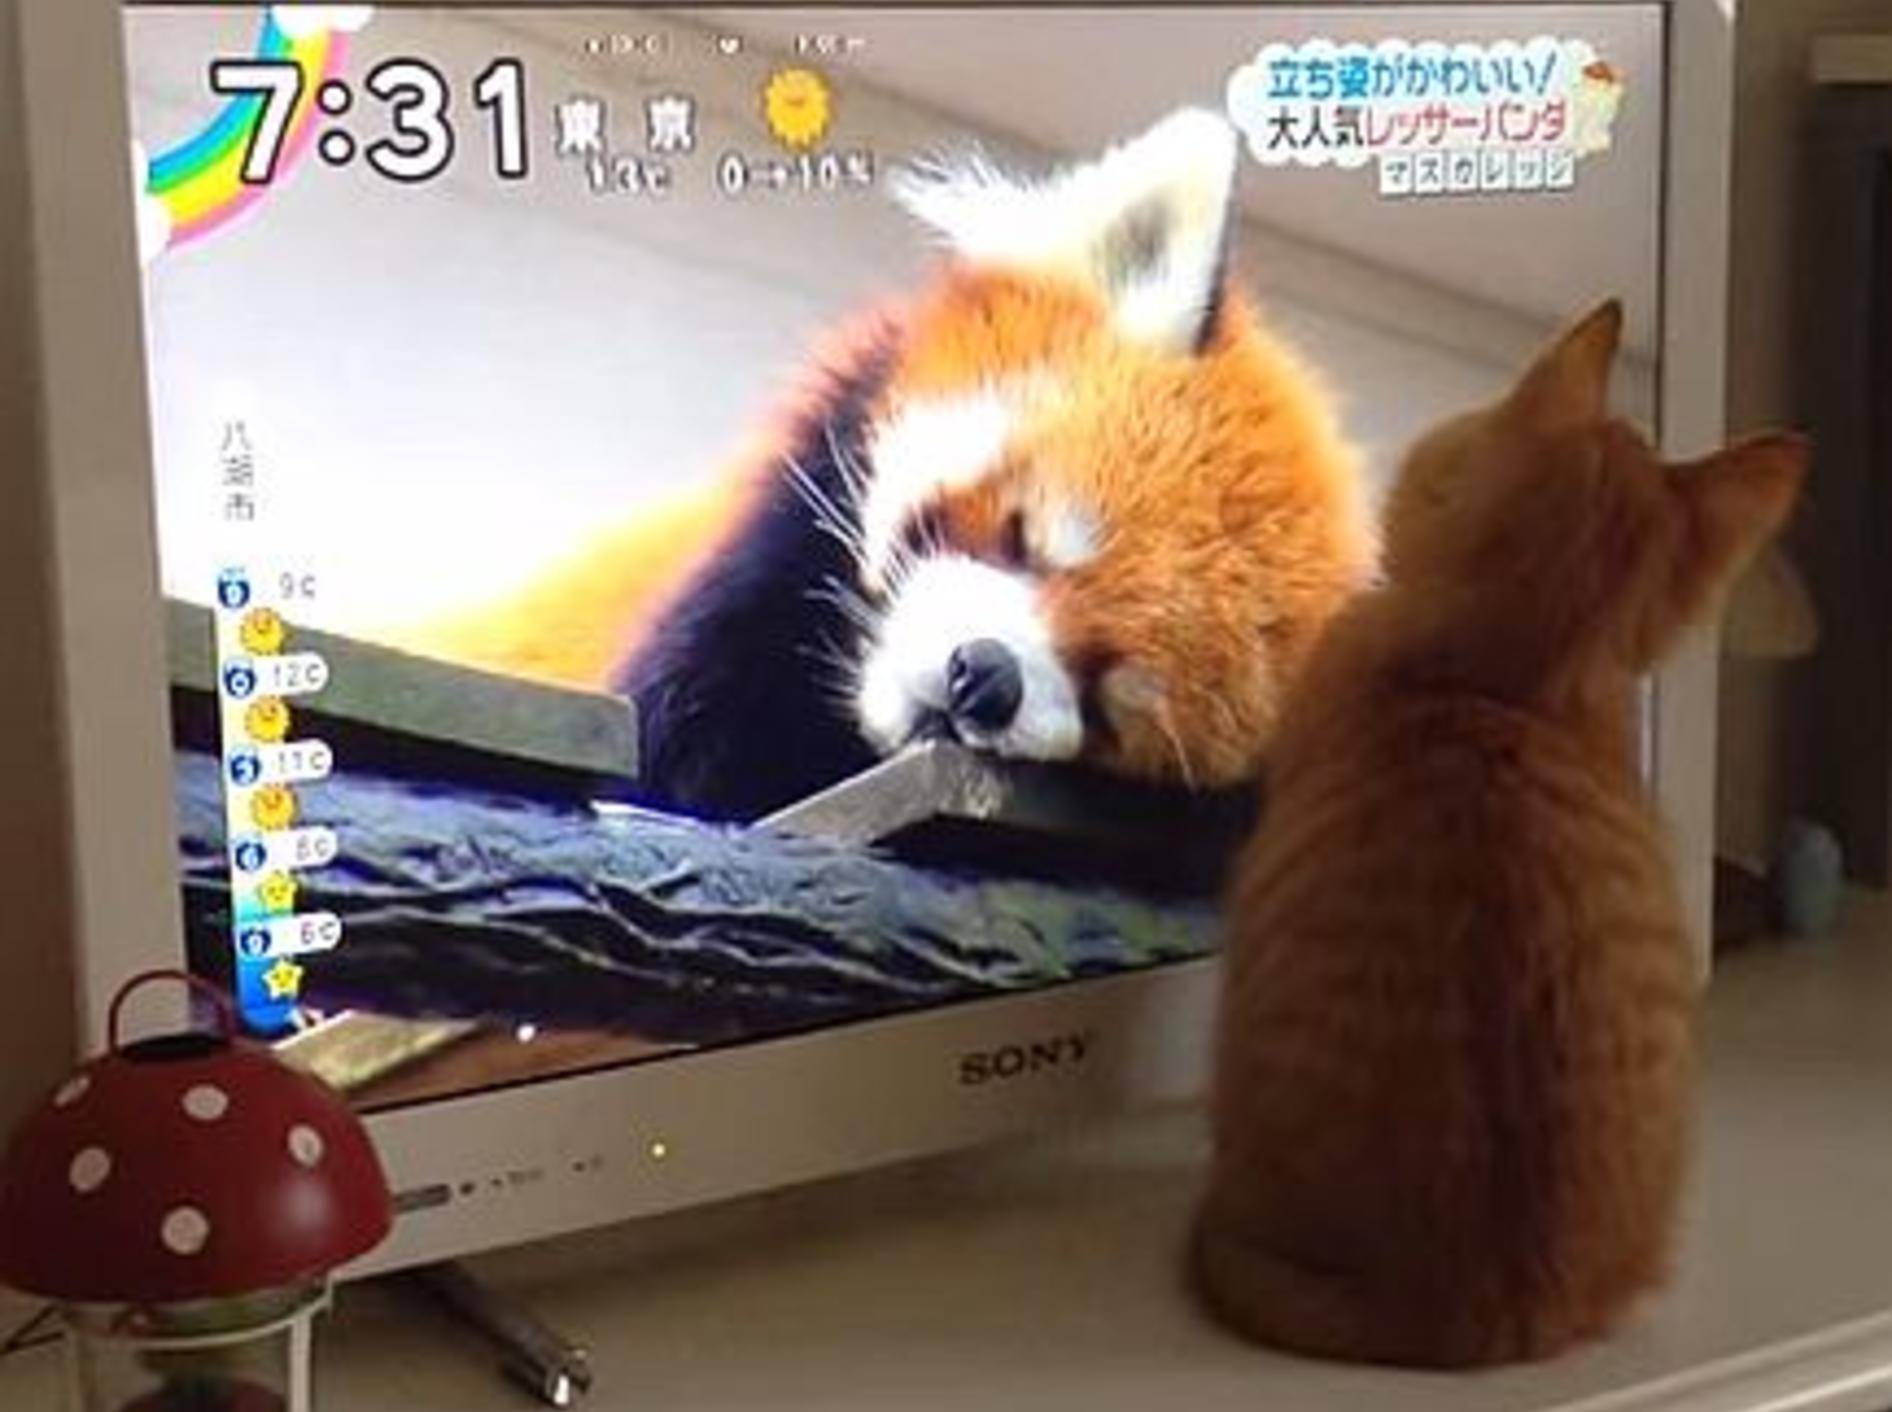 Rotes Katzenbaby: Wow, Tiersendungen sind spannend! – Bild: Shutterstock / kohei ezaki